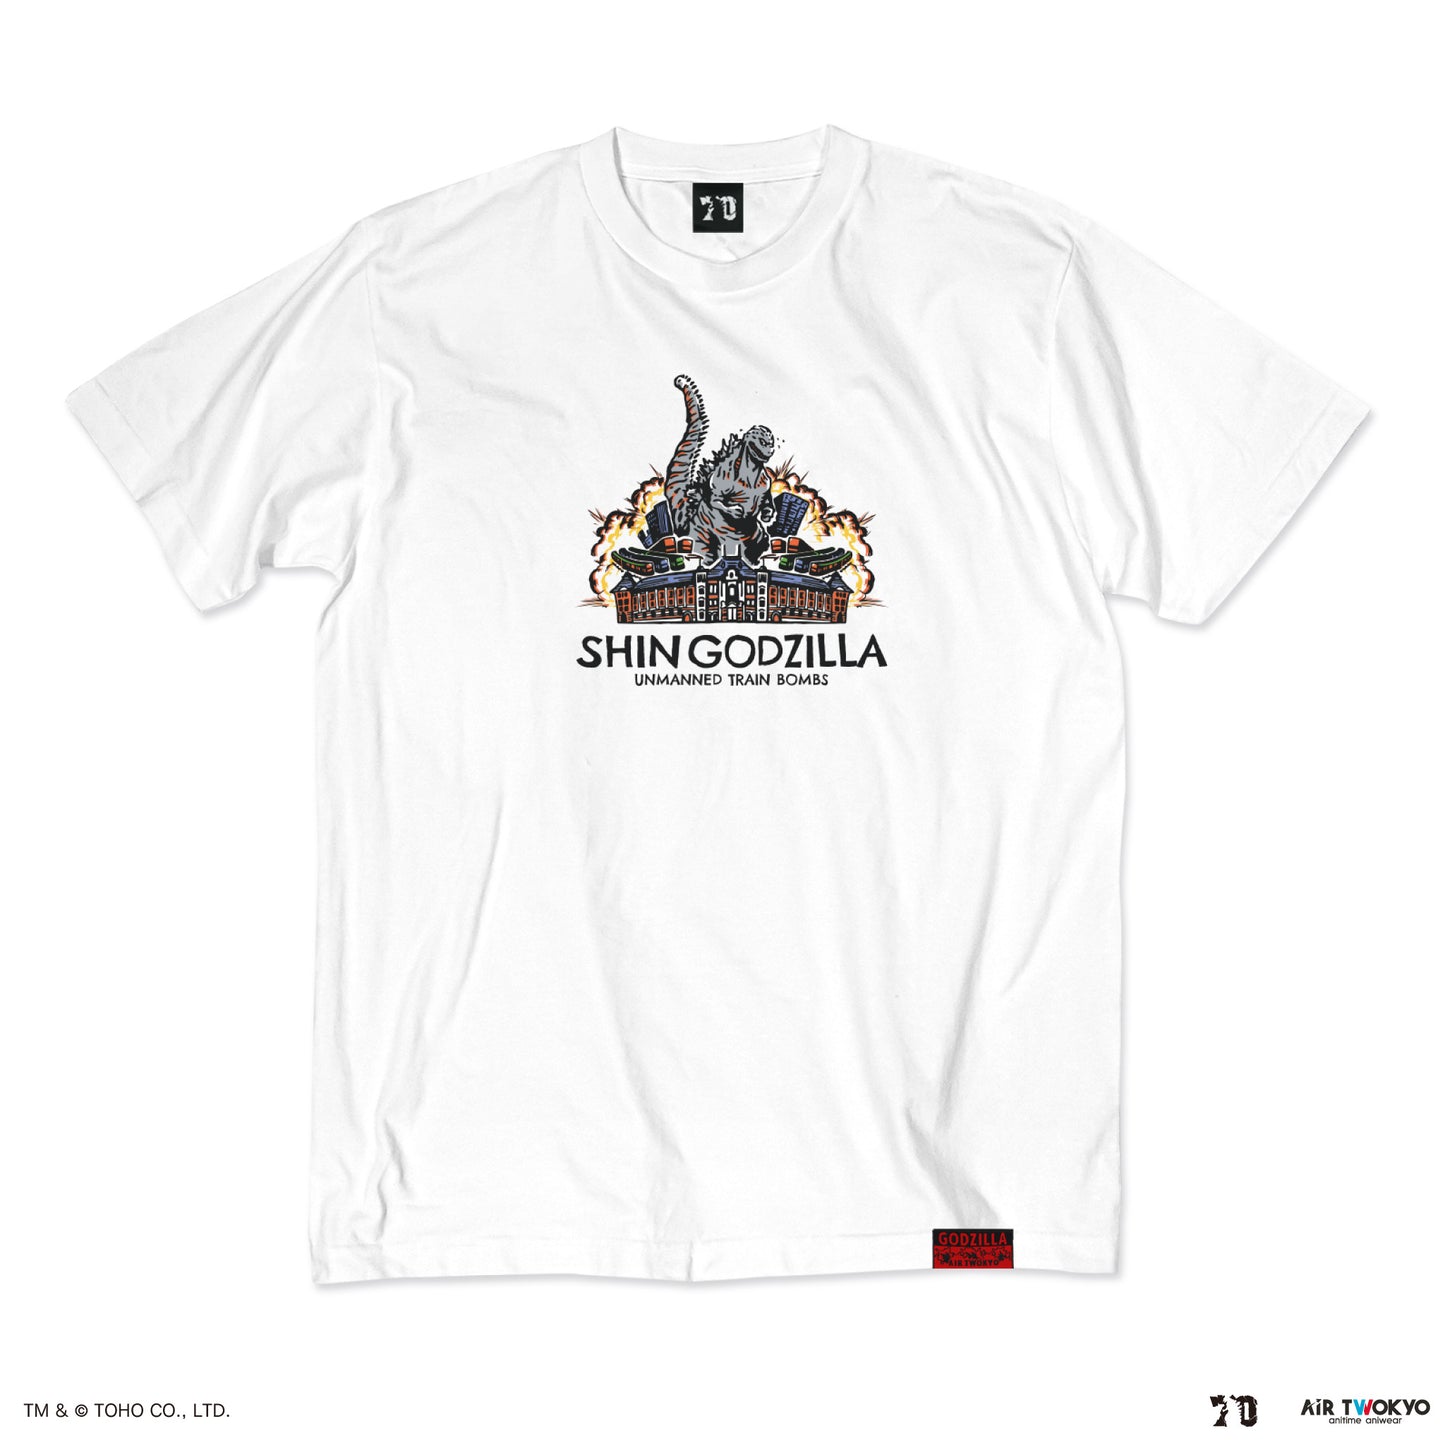 GODZILLA 70th Anniversary "SHIN GODZILLA" Scene Illustration T-shirt